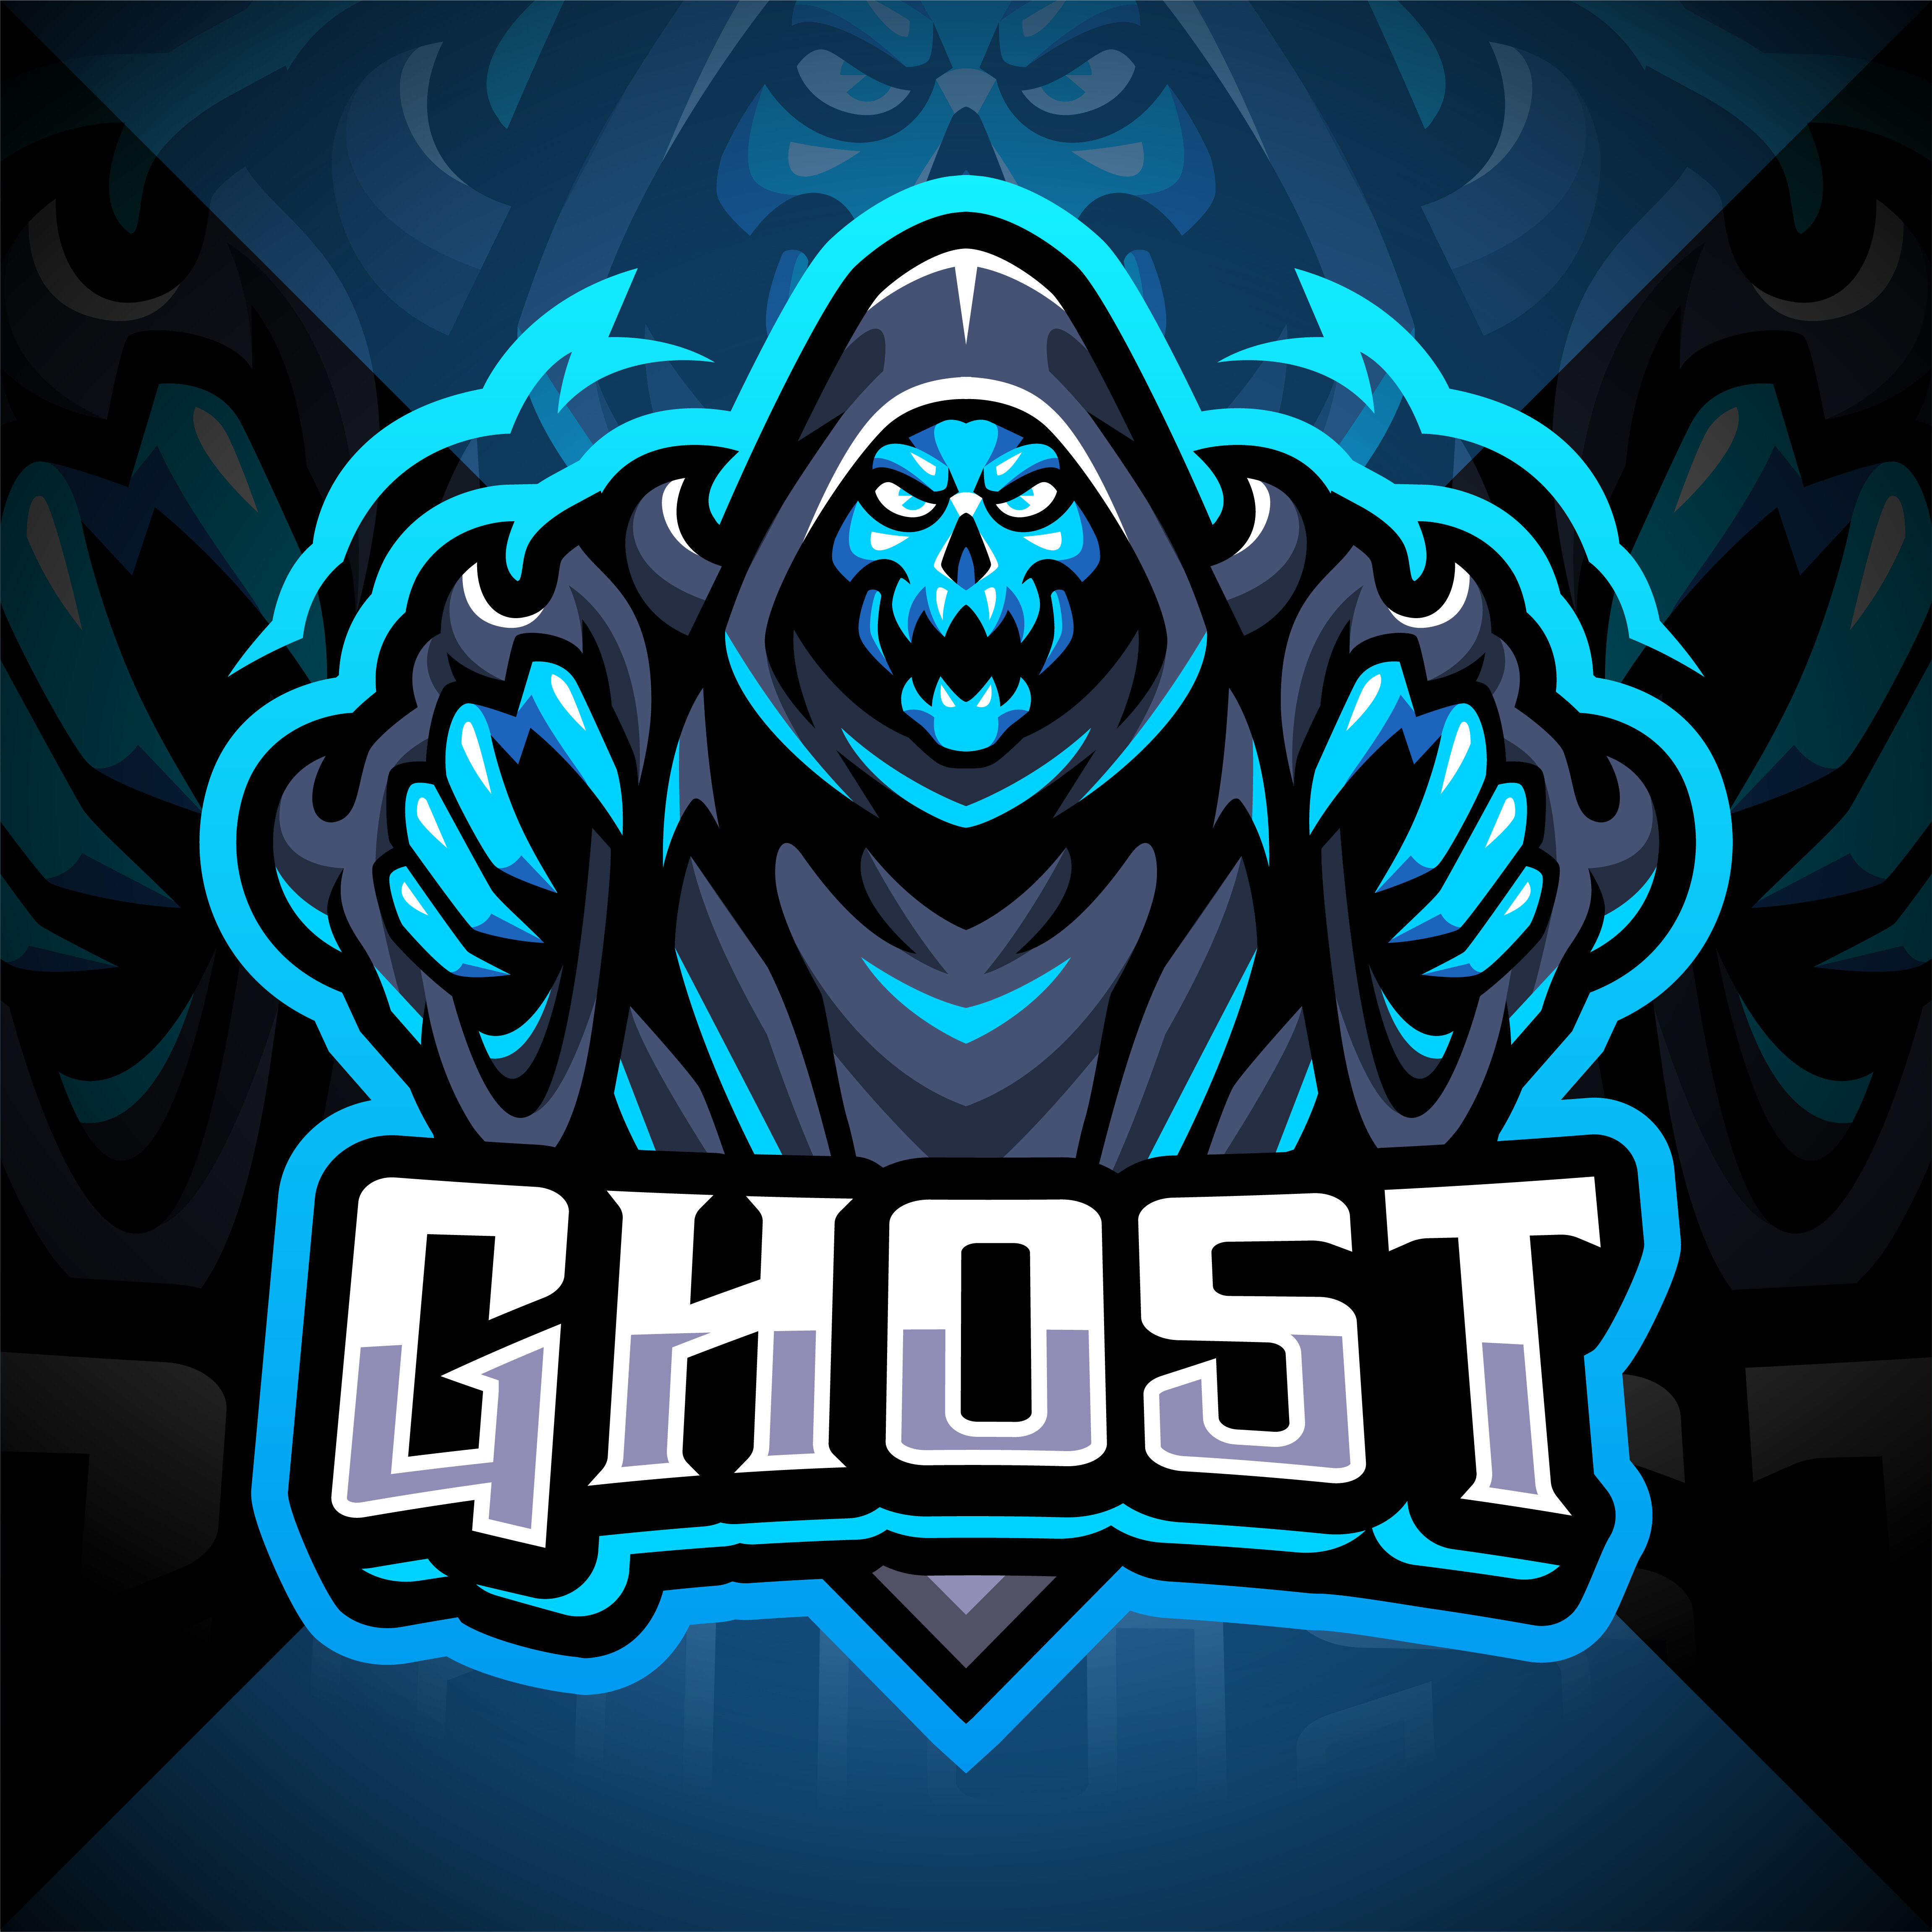 Ghost esport mascot logo design By Visink | TheHungryJPEG